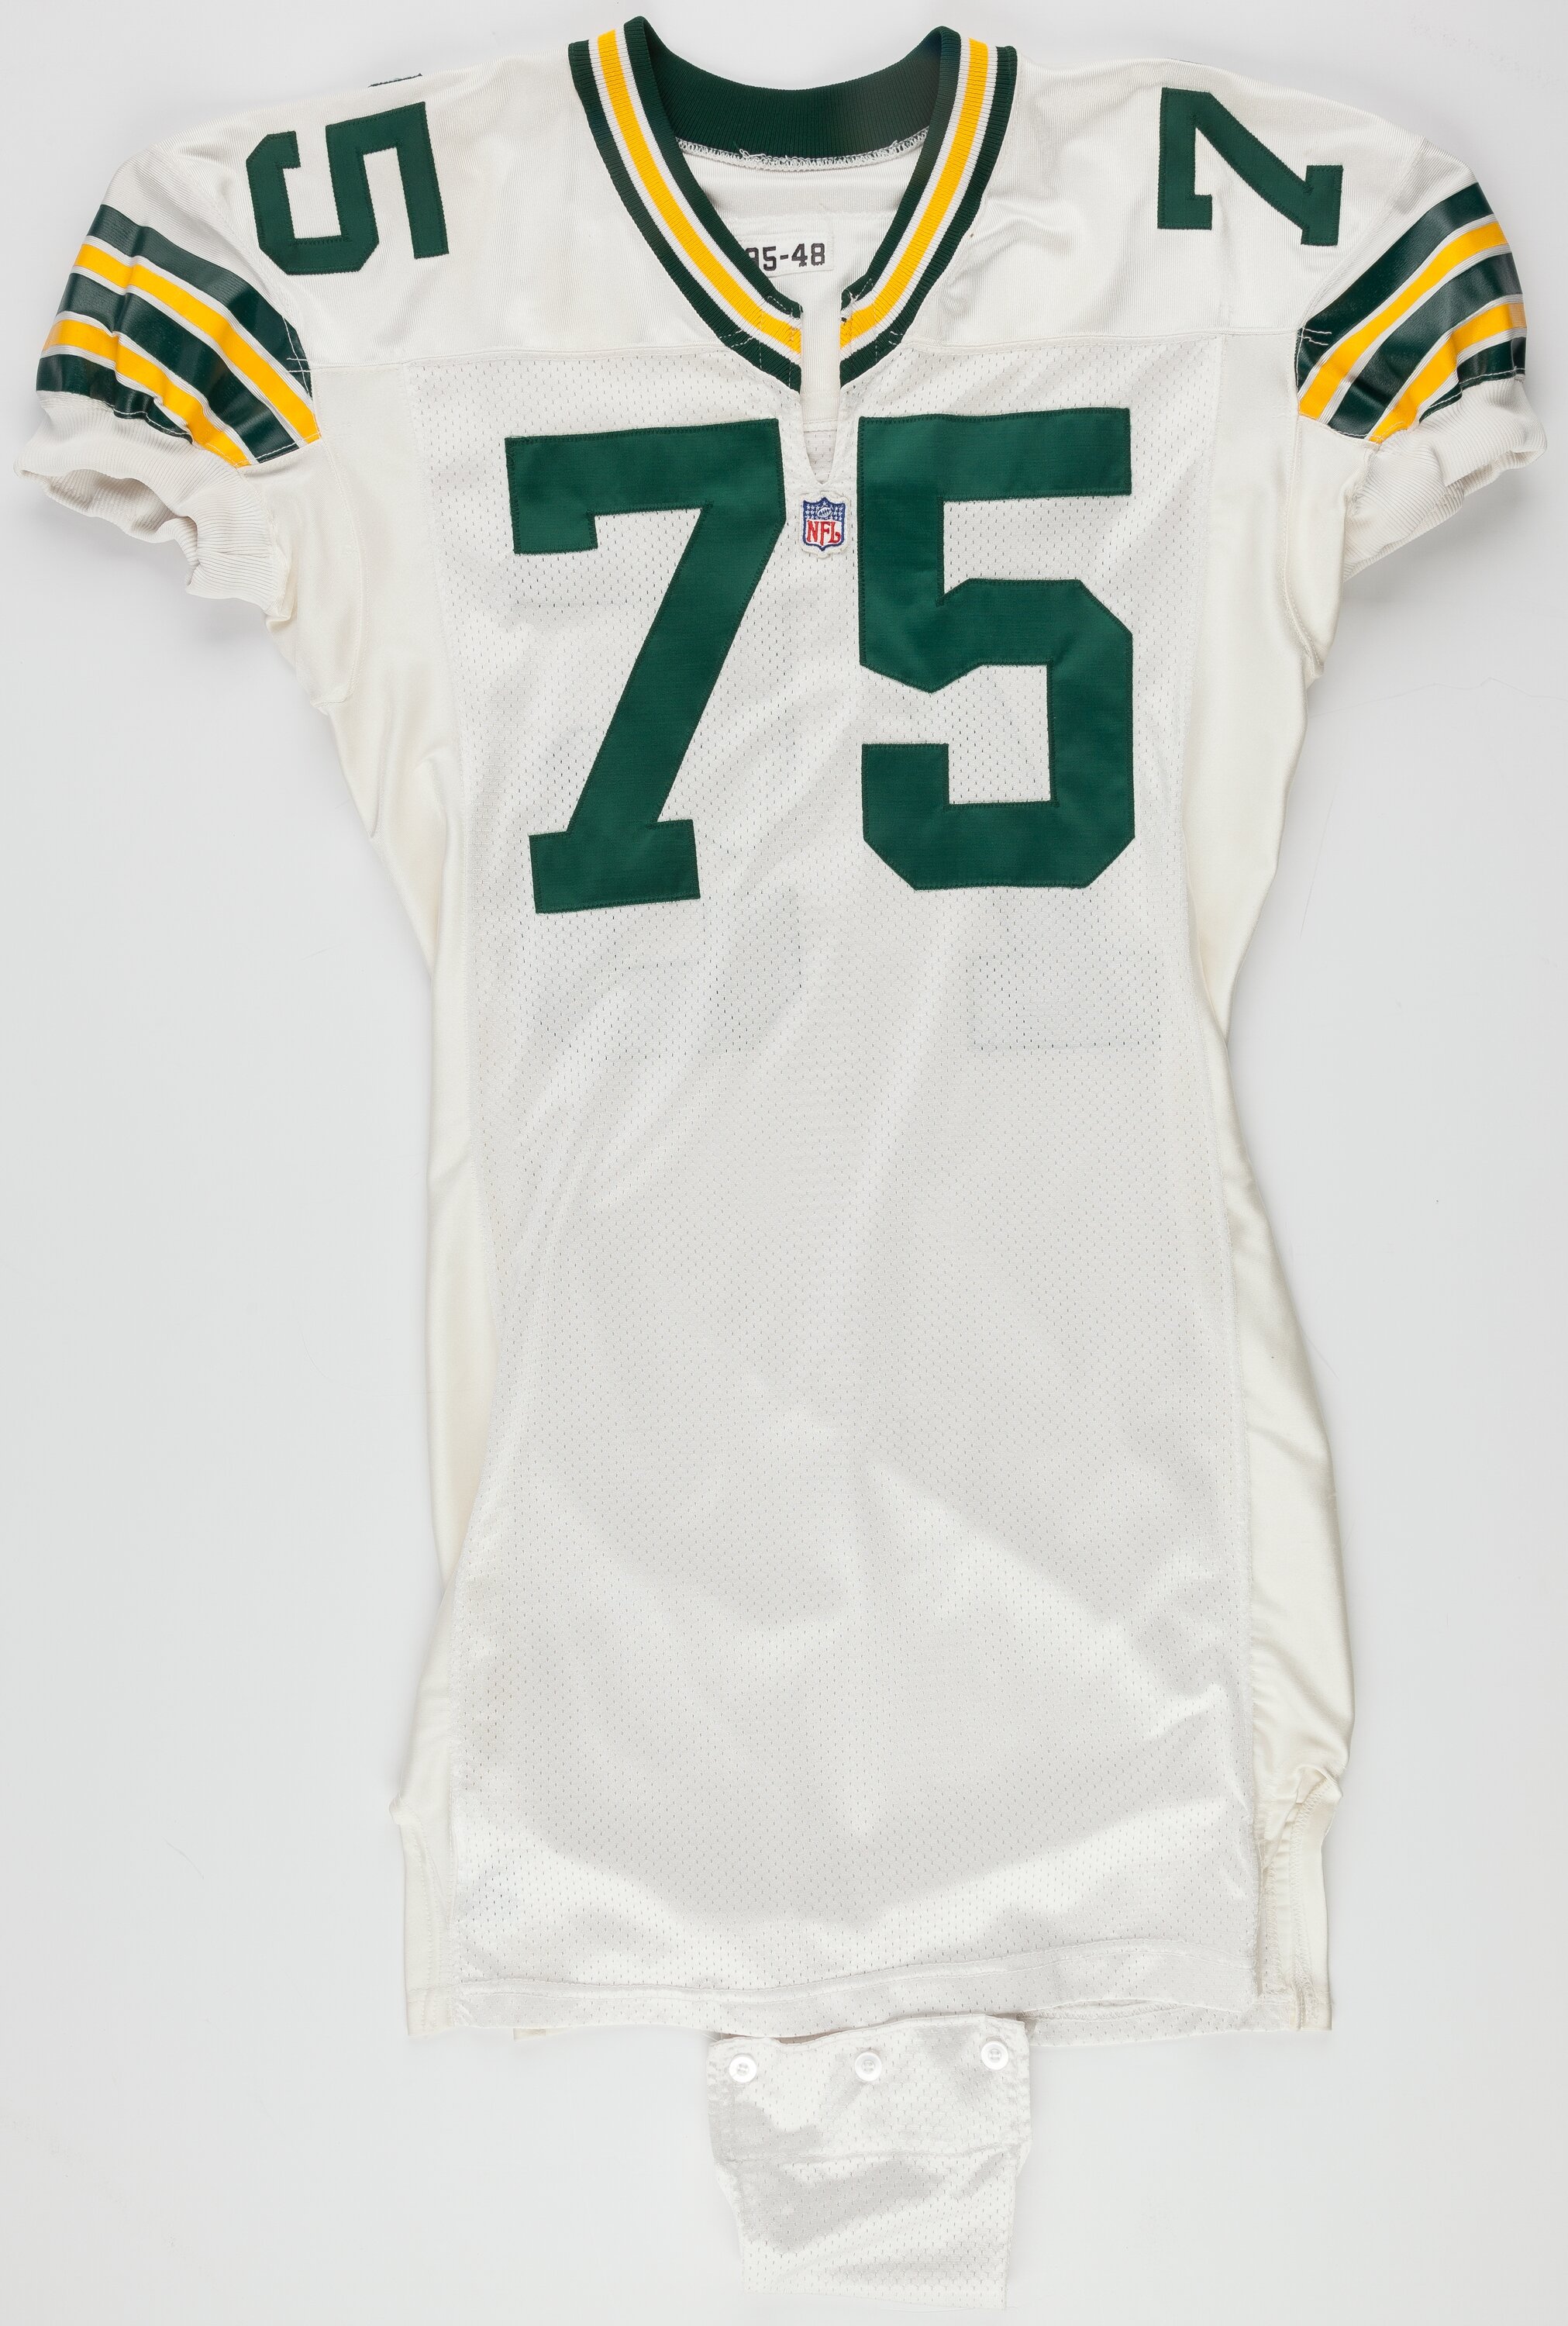 1995 Ken Ruettgers Game Worn, Signed Green Bay Packers Jersey -, Lot  #41140